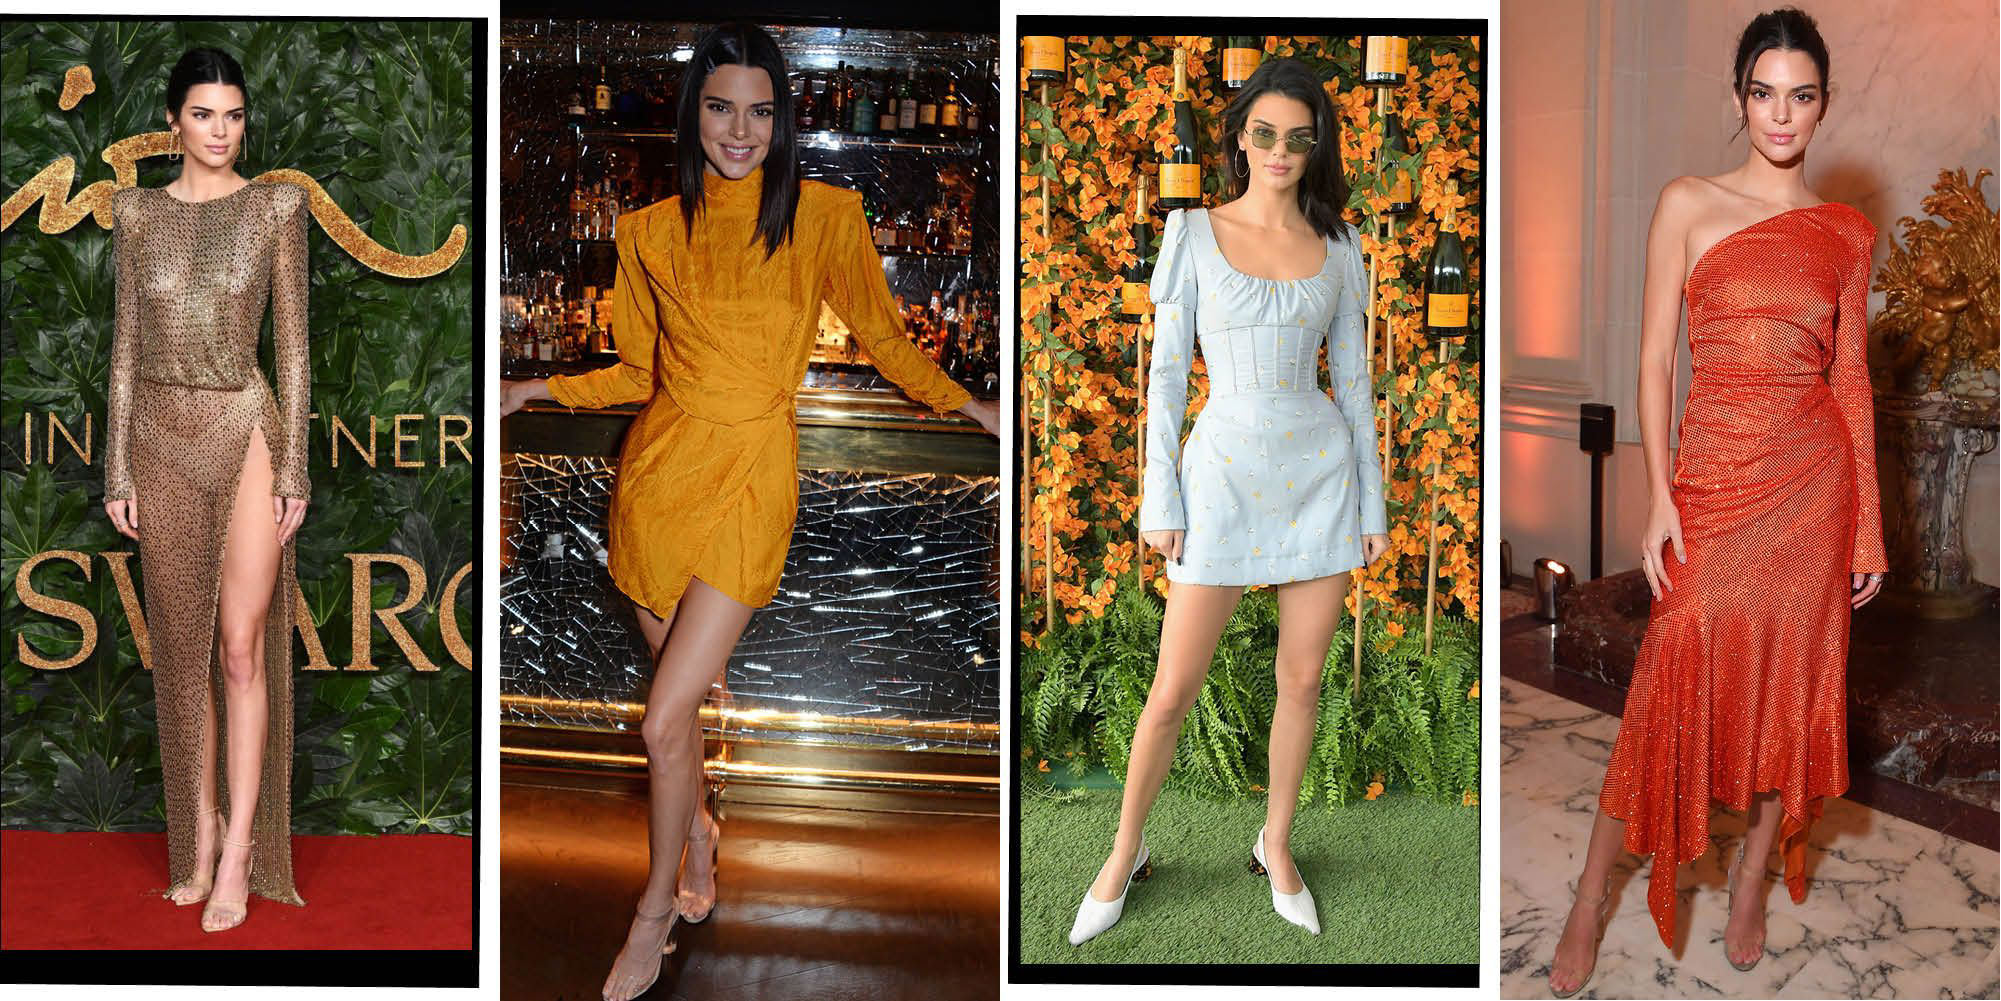 Kylie Jenner shows off figure in skintight Fendi minidress as she